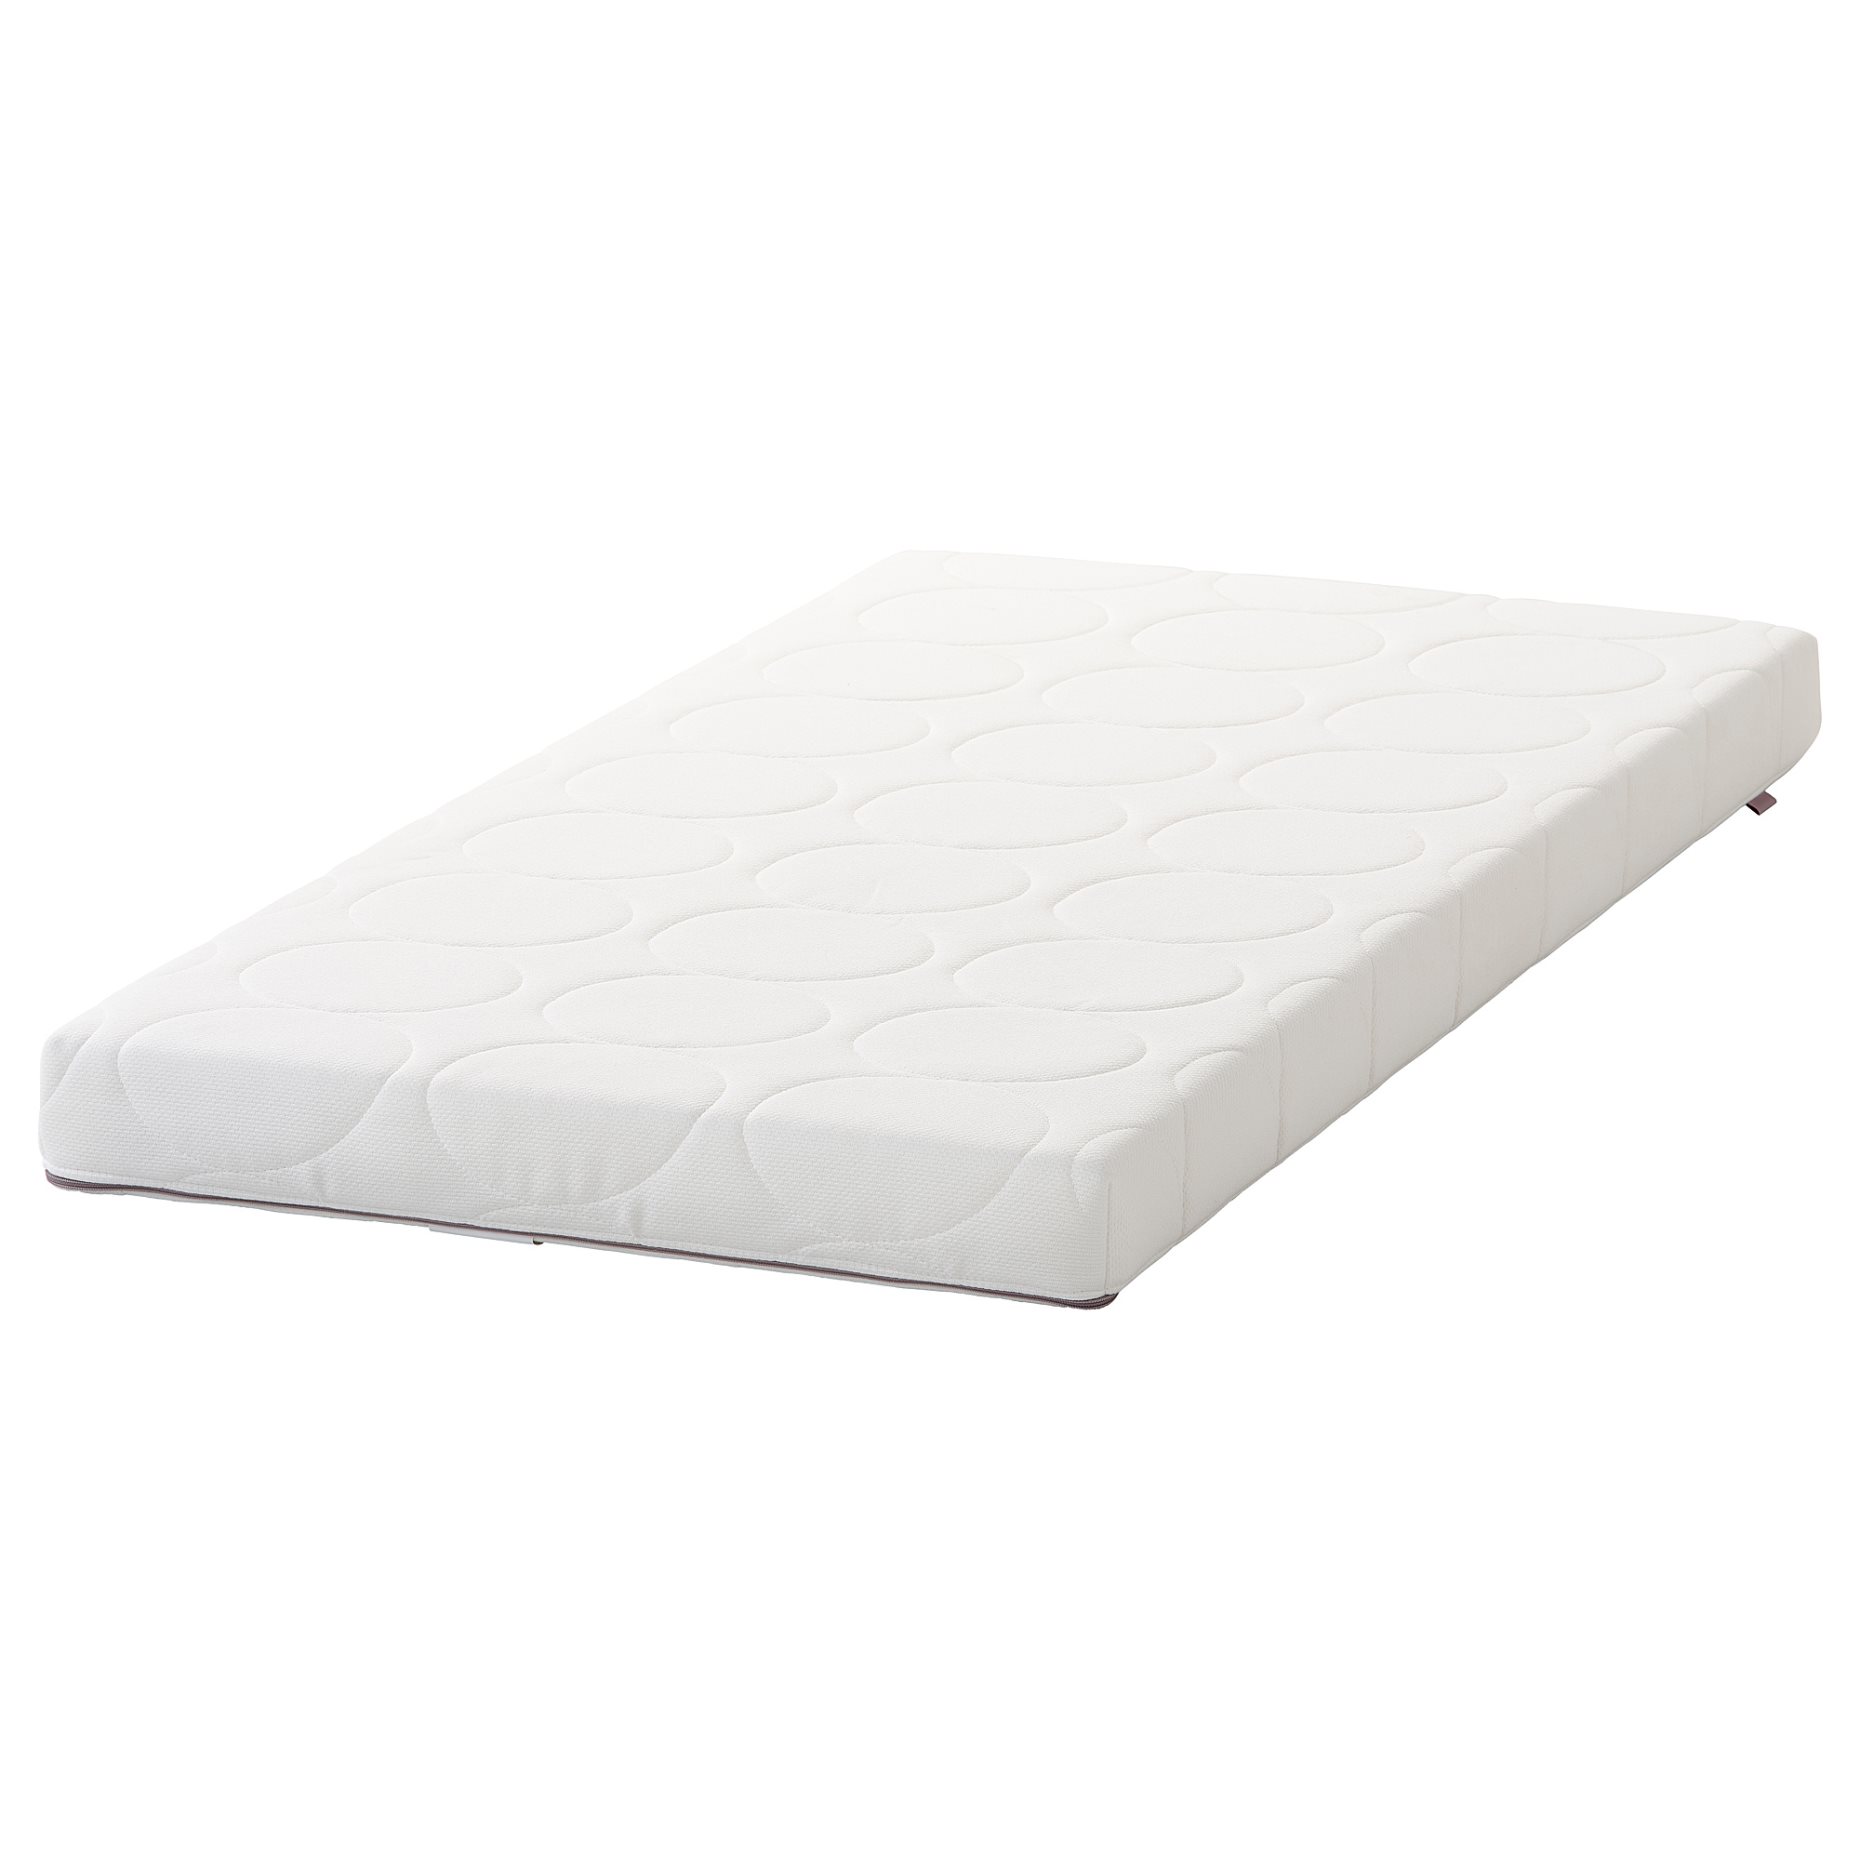 SKONAST, foam mattress for cot, 203.554.53